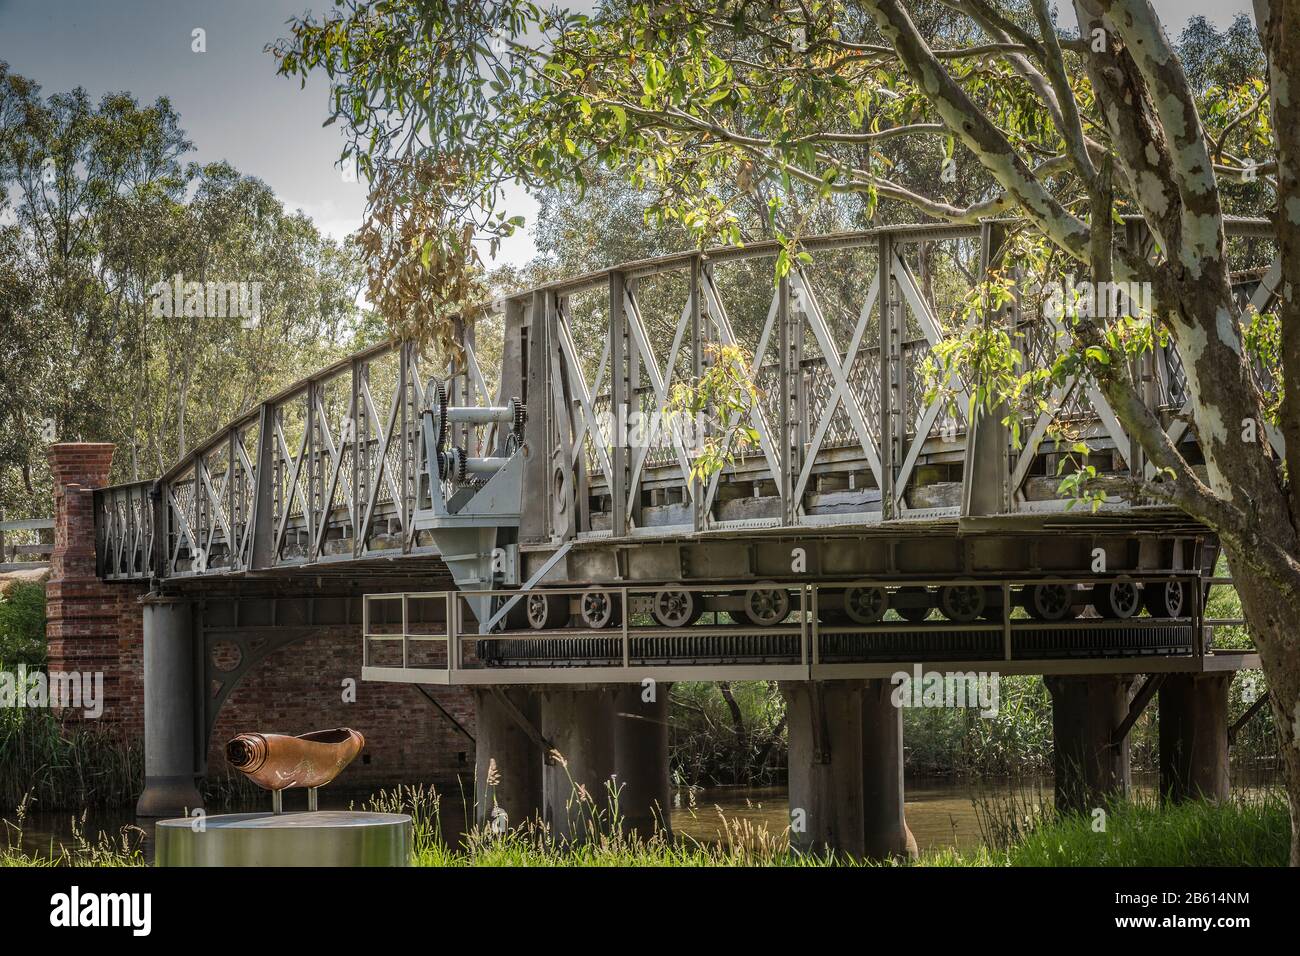 Built in 1883 Sale swing bridge was the first movable bridge in Victoria Australia Stock Photo